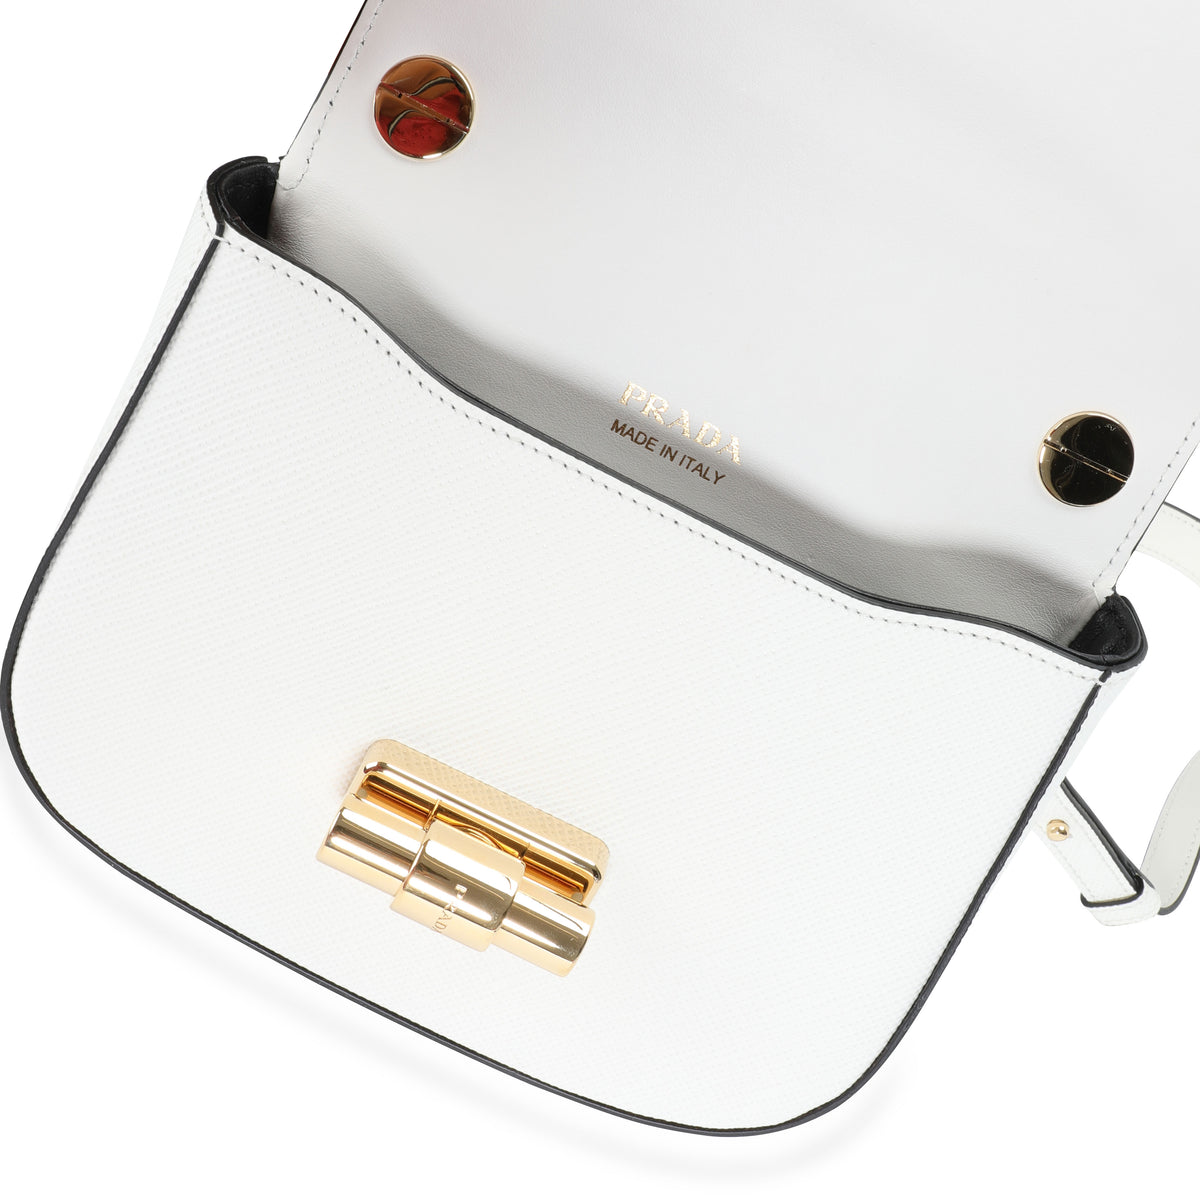 Prada White/Black Saffiano Leather Pattina Bianco Shoulder Bag